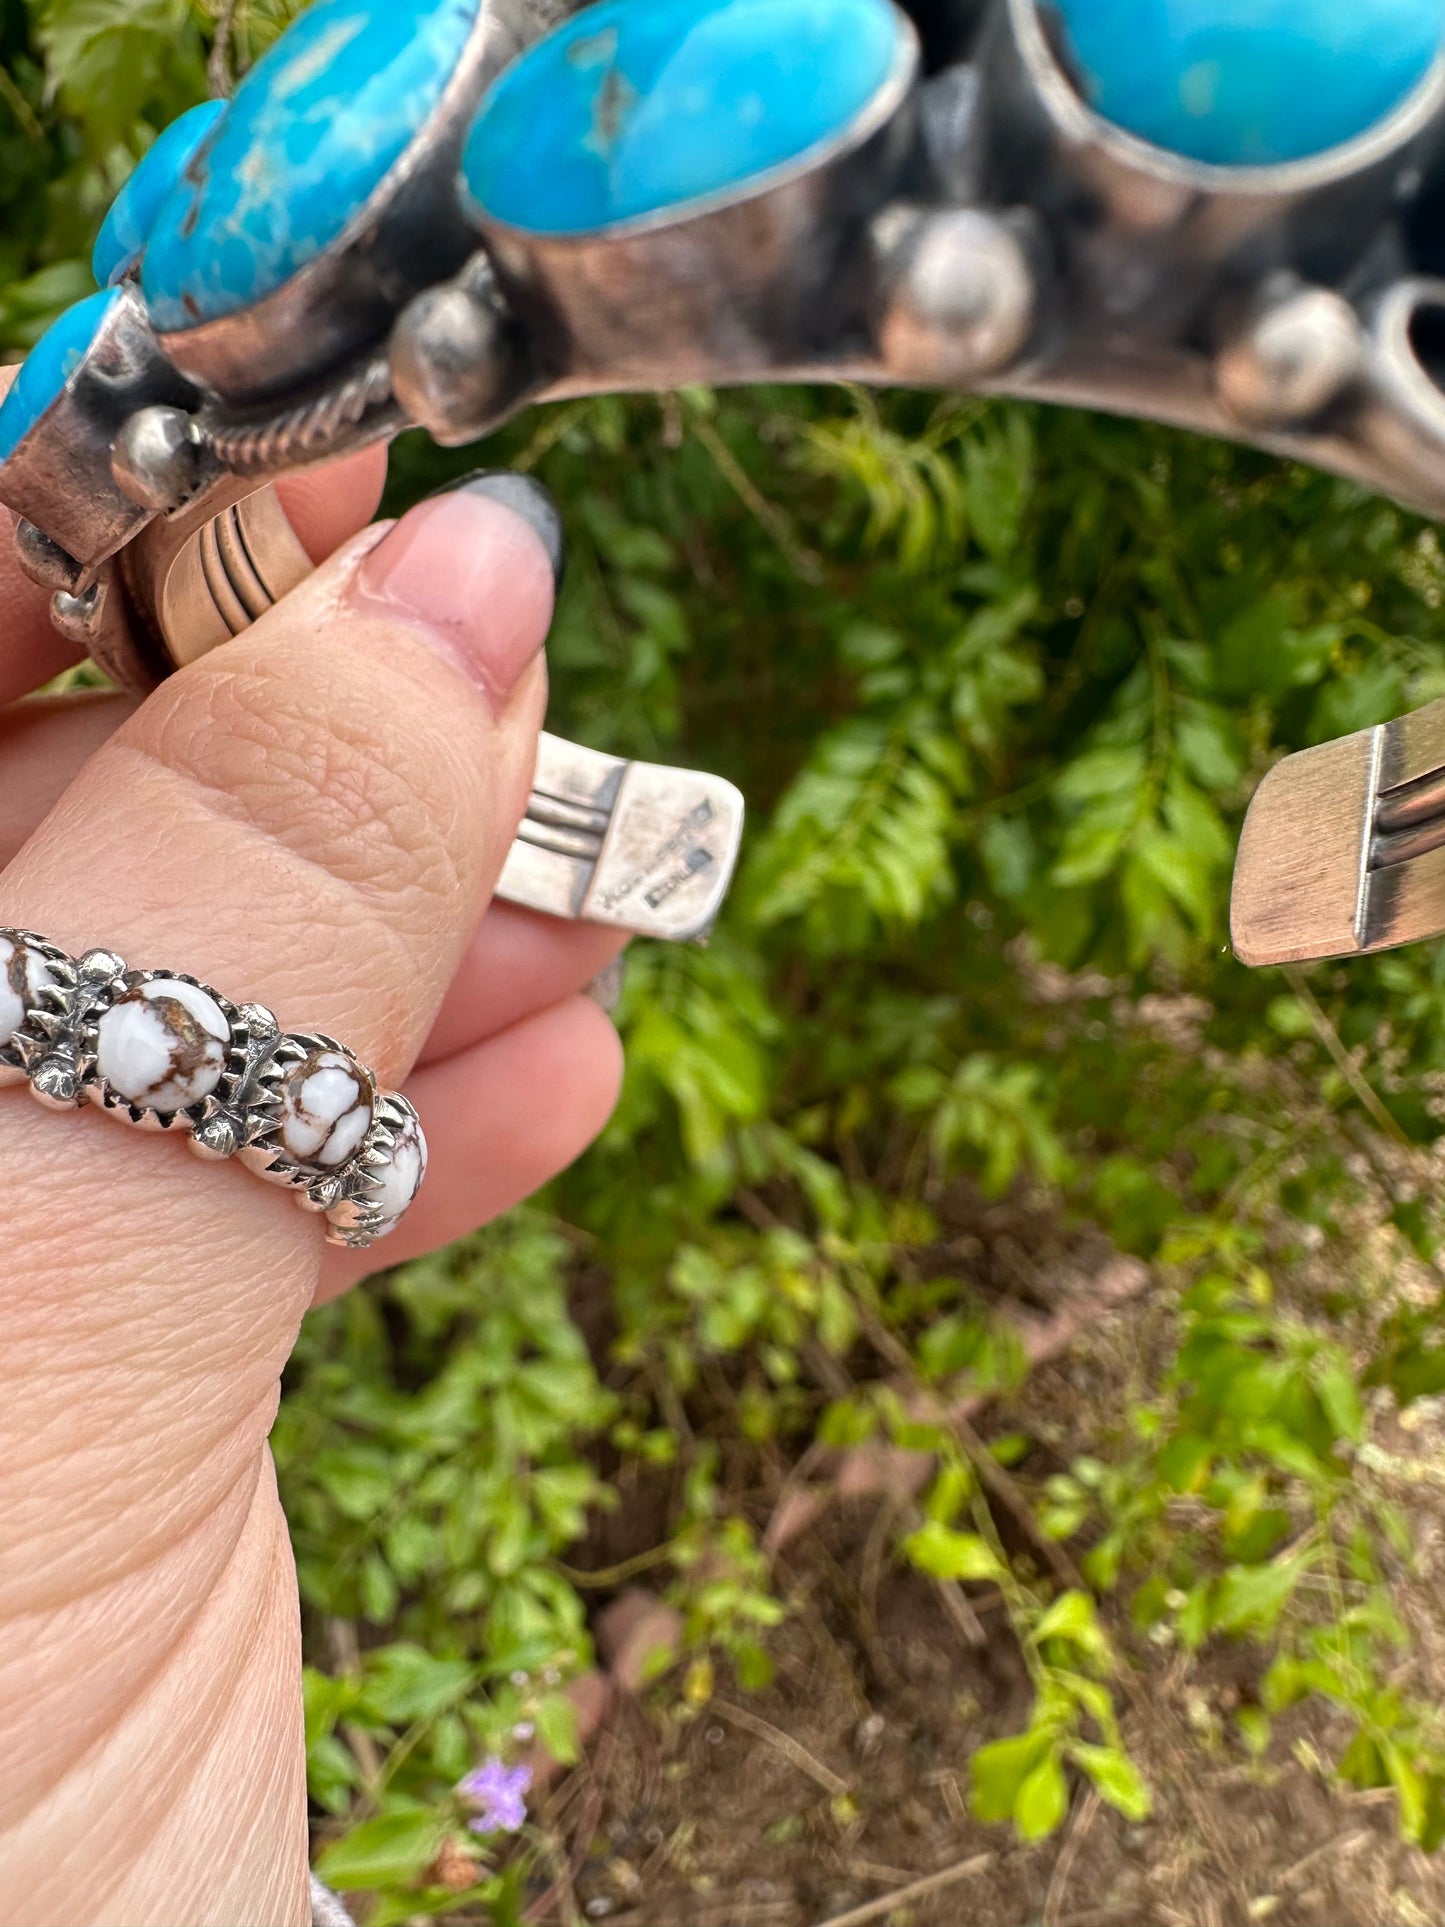 Beautiful Kathleen Livingston Navajo Sterling Turquoise Bracelet Cuff Signed